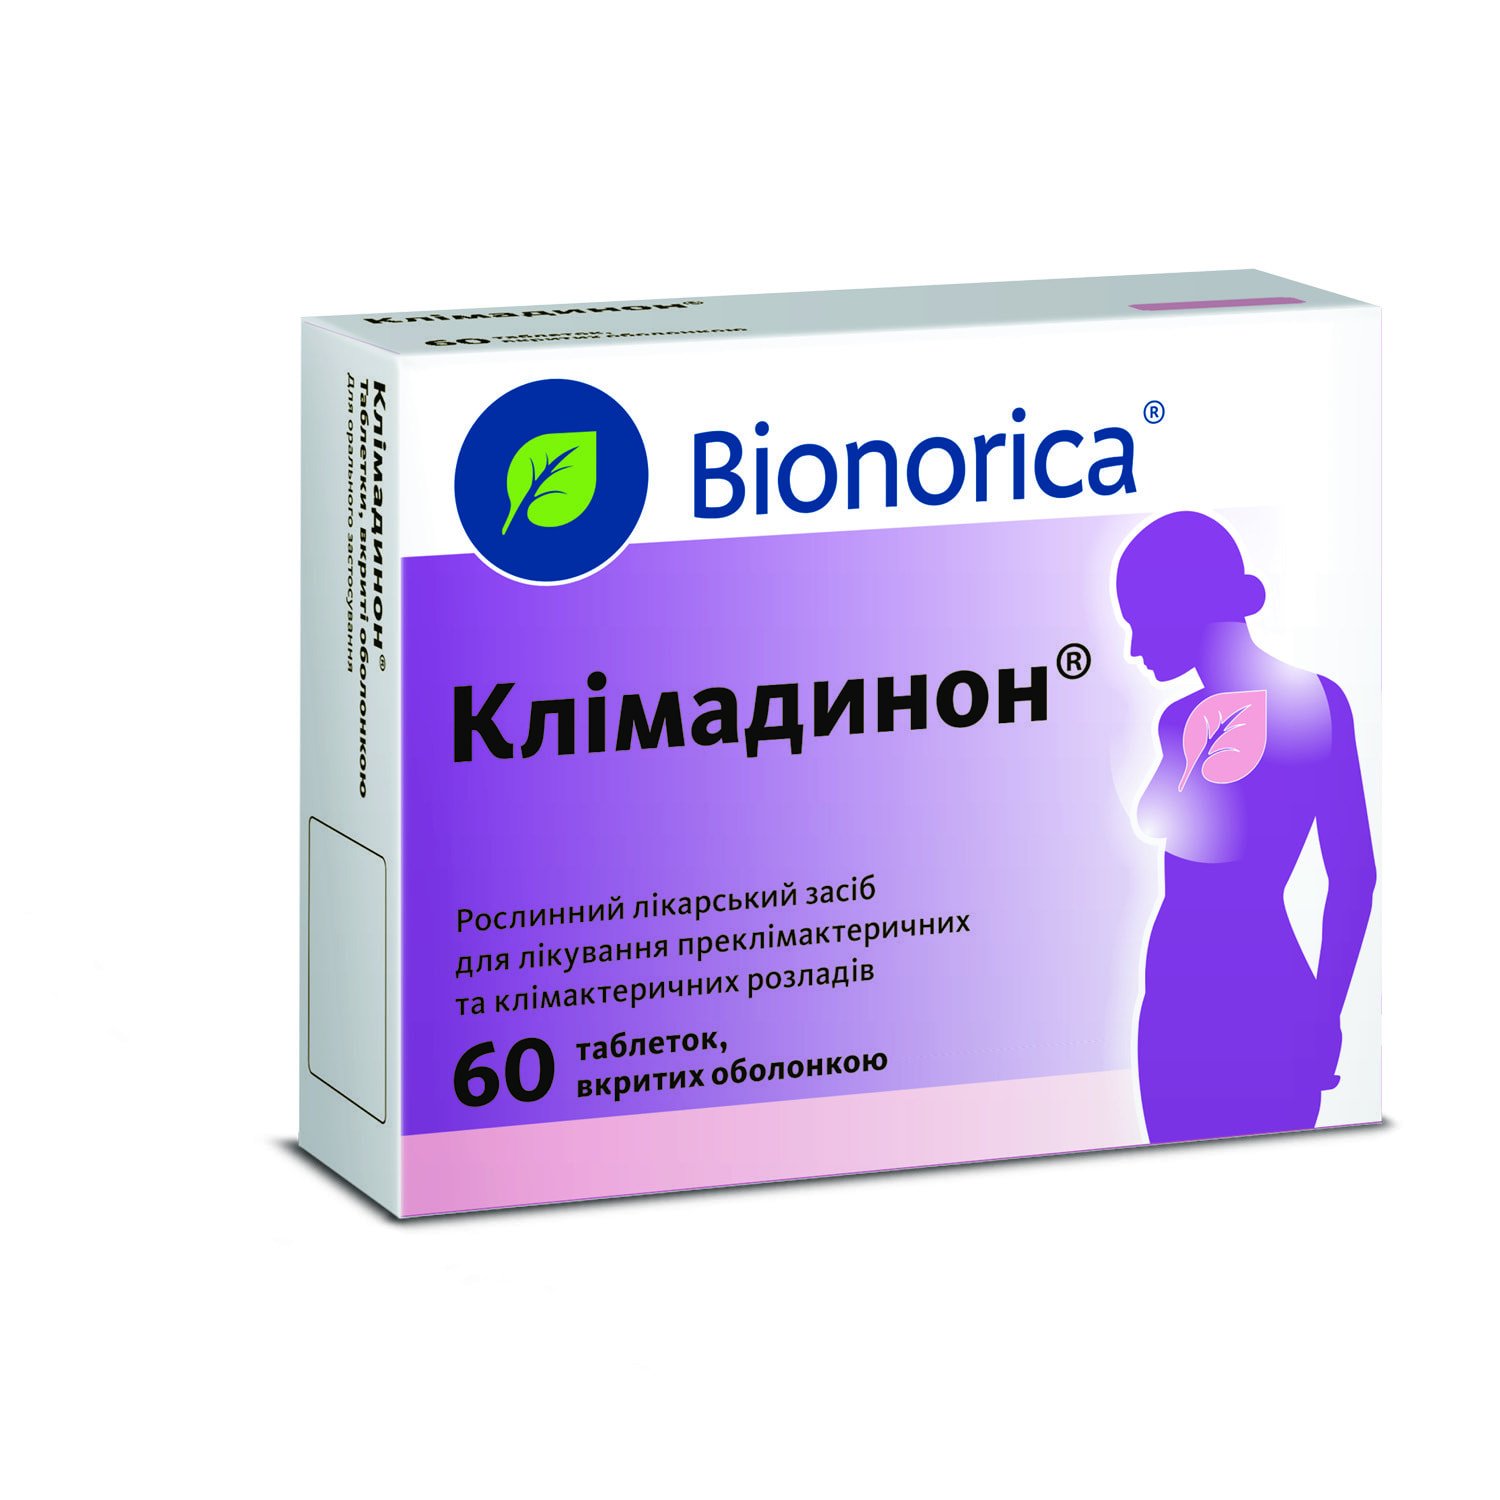 Циклодинон пролактин. Bionorica Циклодинон. Bionorica Климадинон. Климадинон тбл №60. Bionorica Мастодинон.